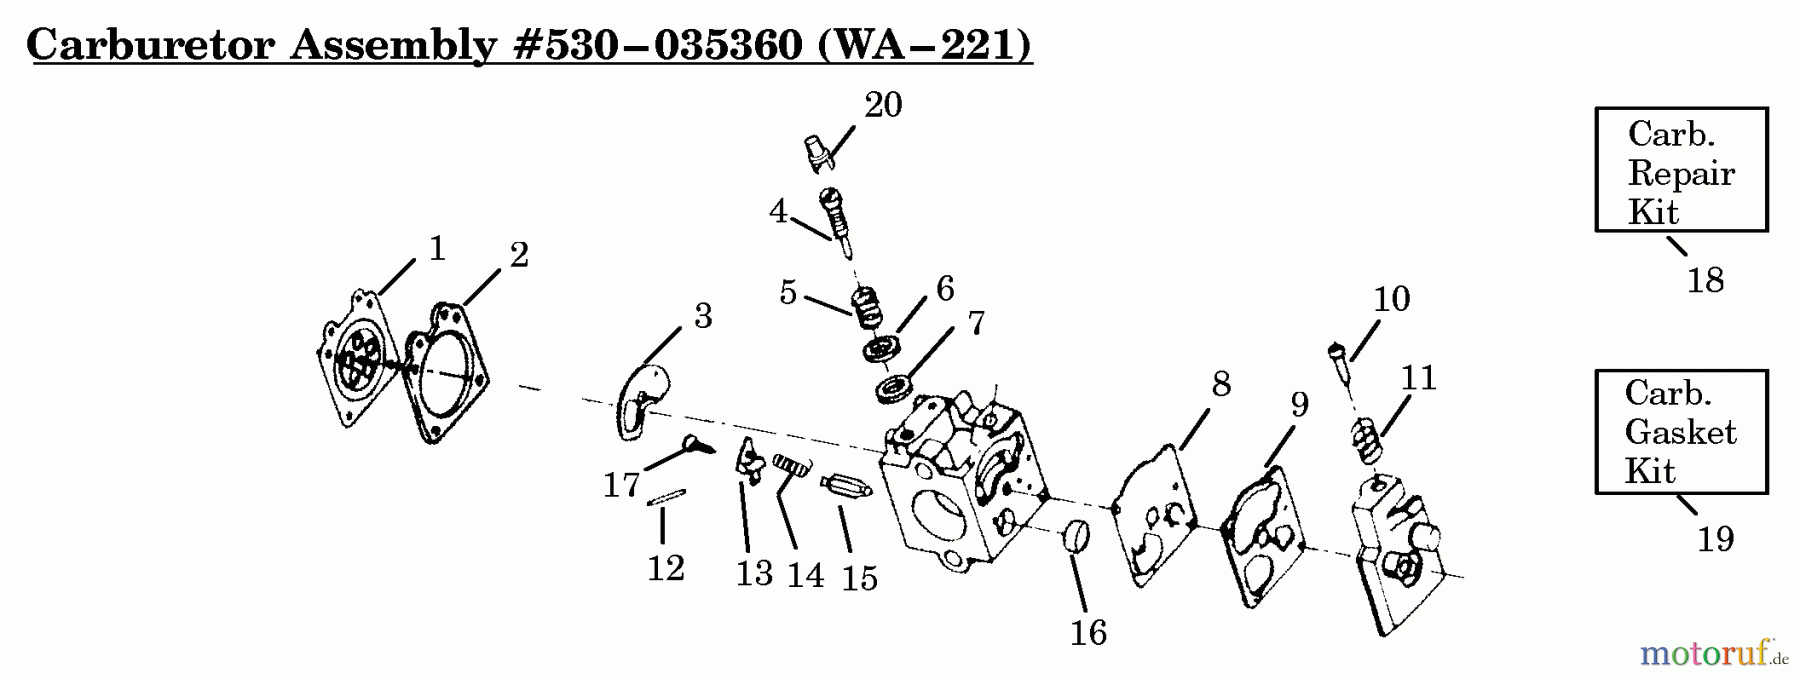  Poulan / Weed Eater Motorsensen, Trimmer HP28P - Weed Eater String Trimmer Carburetor Assembly (WA221) P/N 530035360